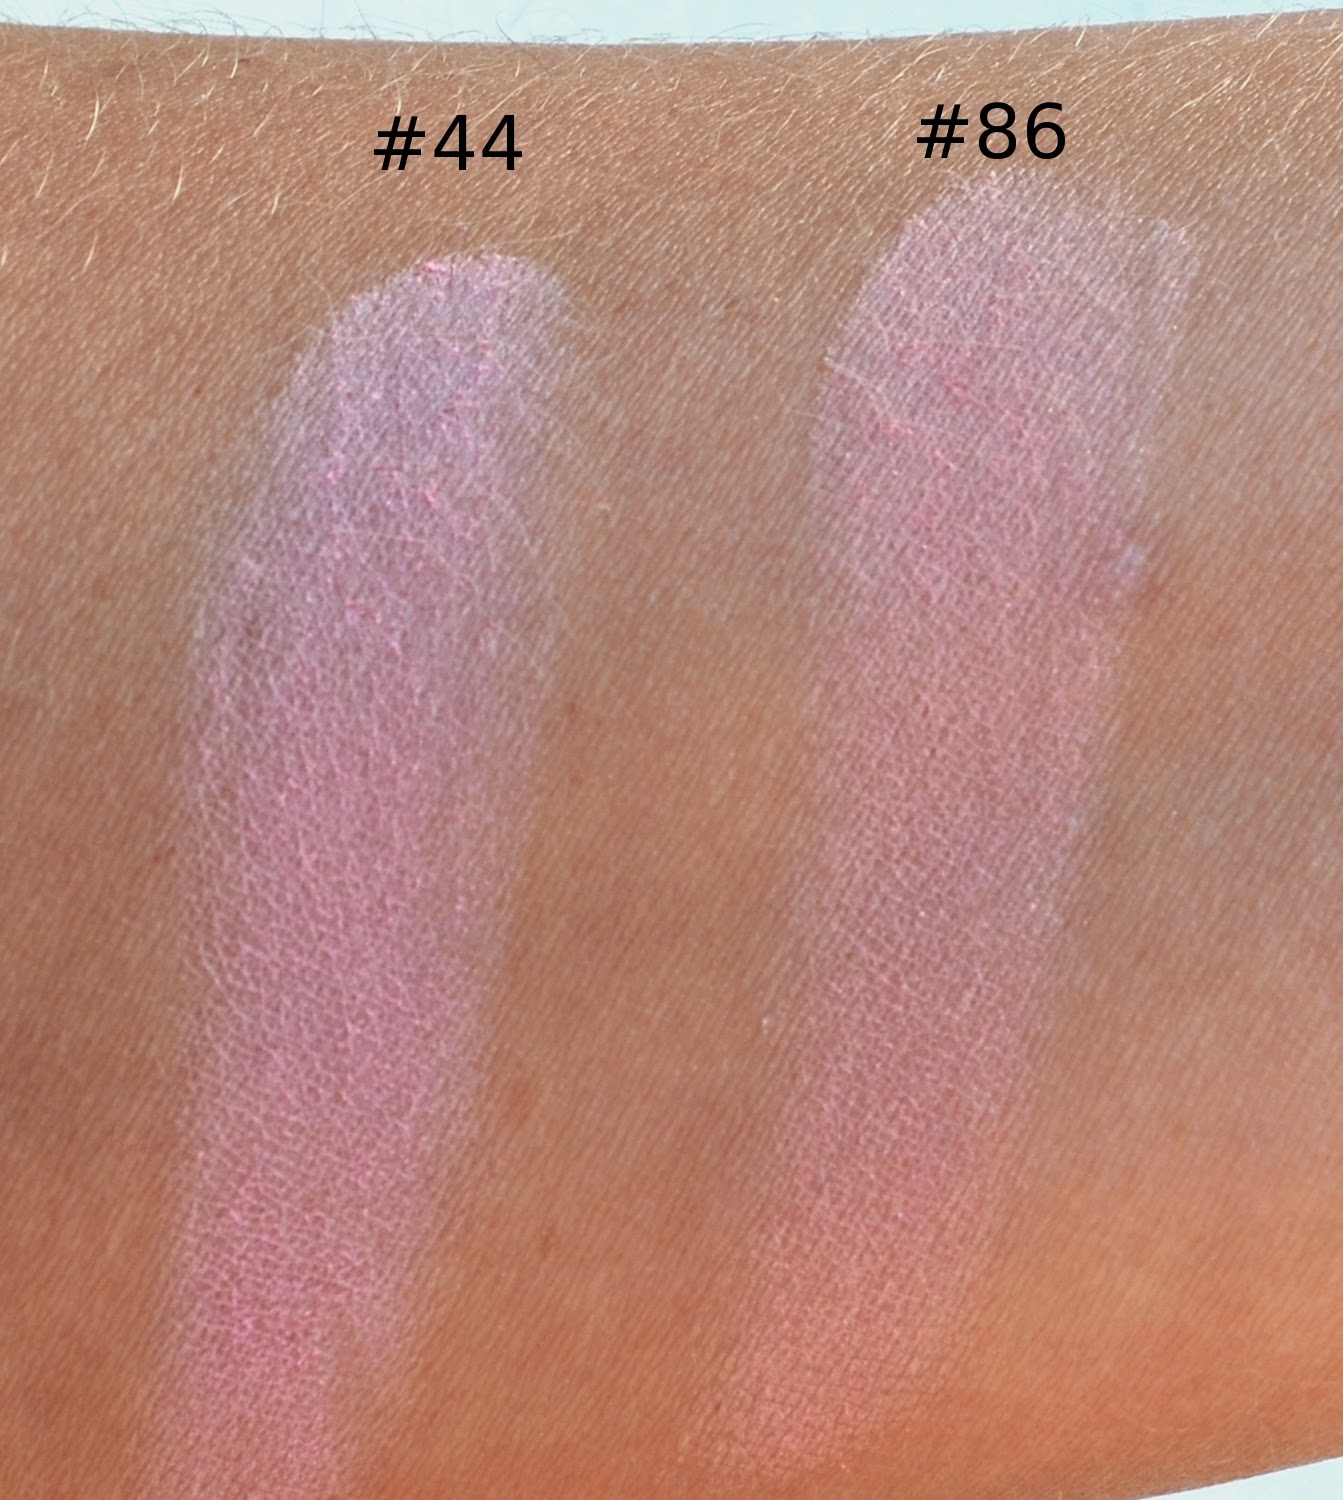 Chanel Joues Contraste Powder Blush #86 Discretion vs. #44 Narcisse